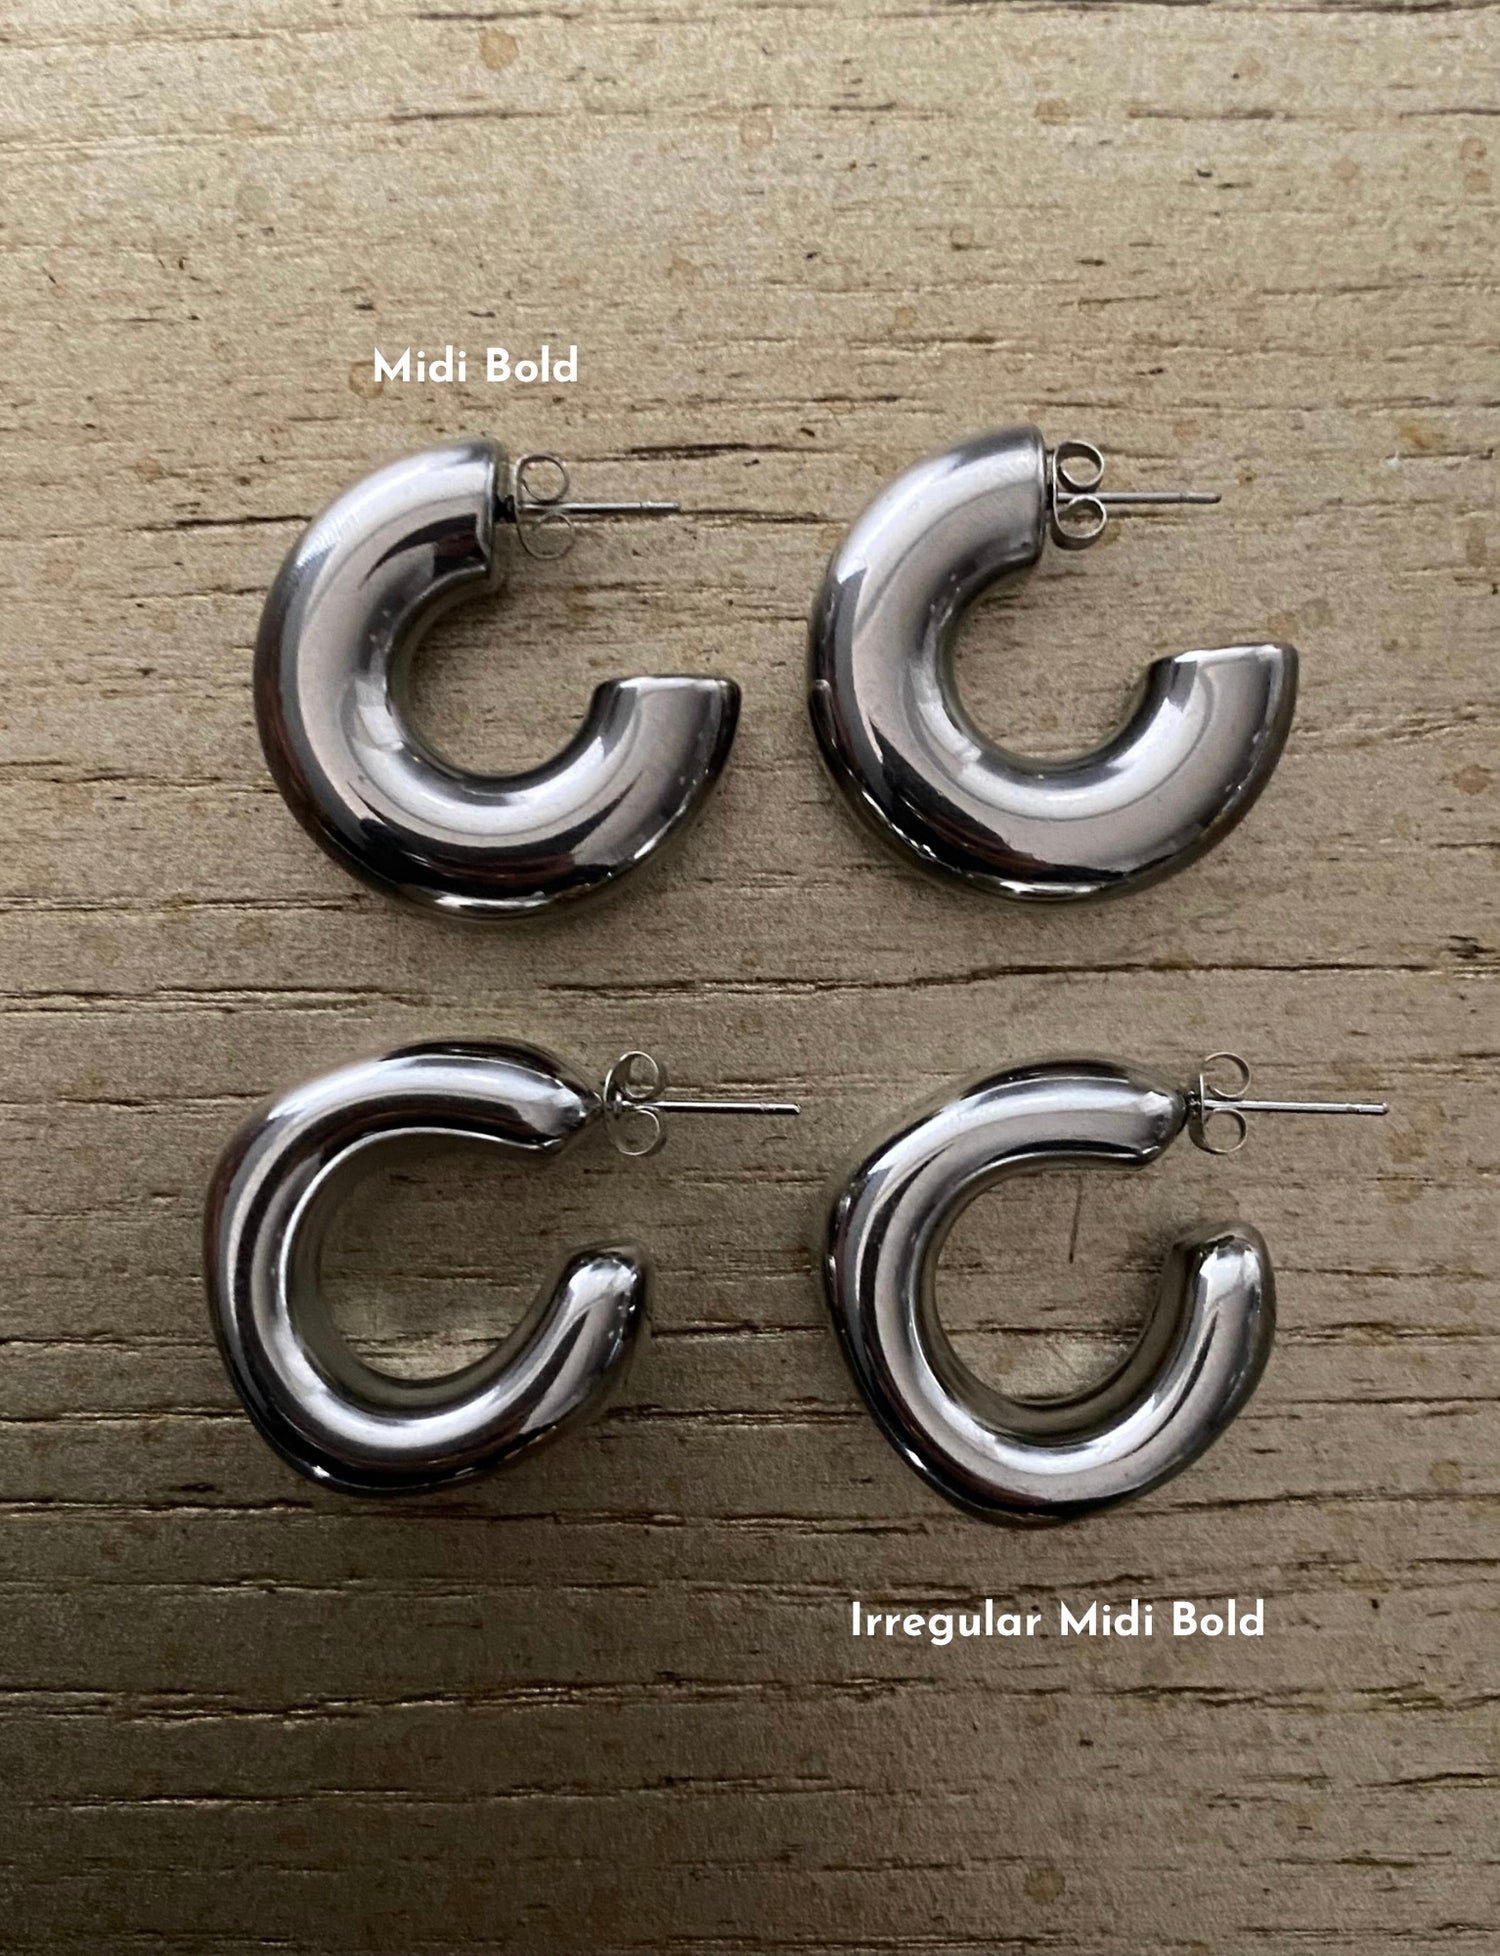 Irregular Midi Bold Steel Earrings